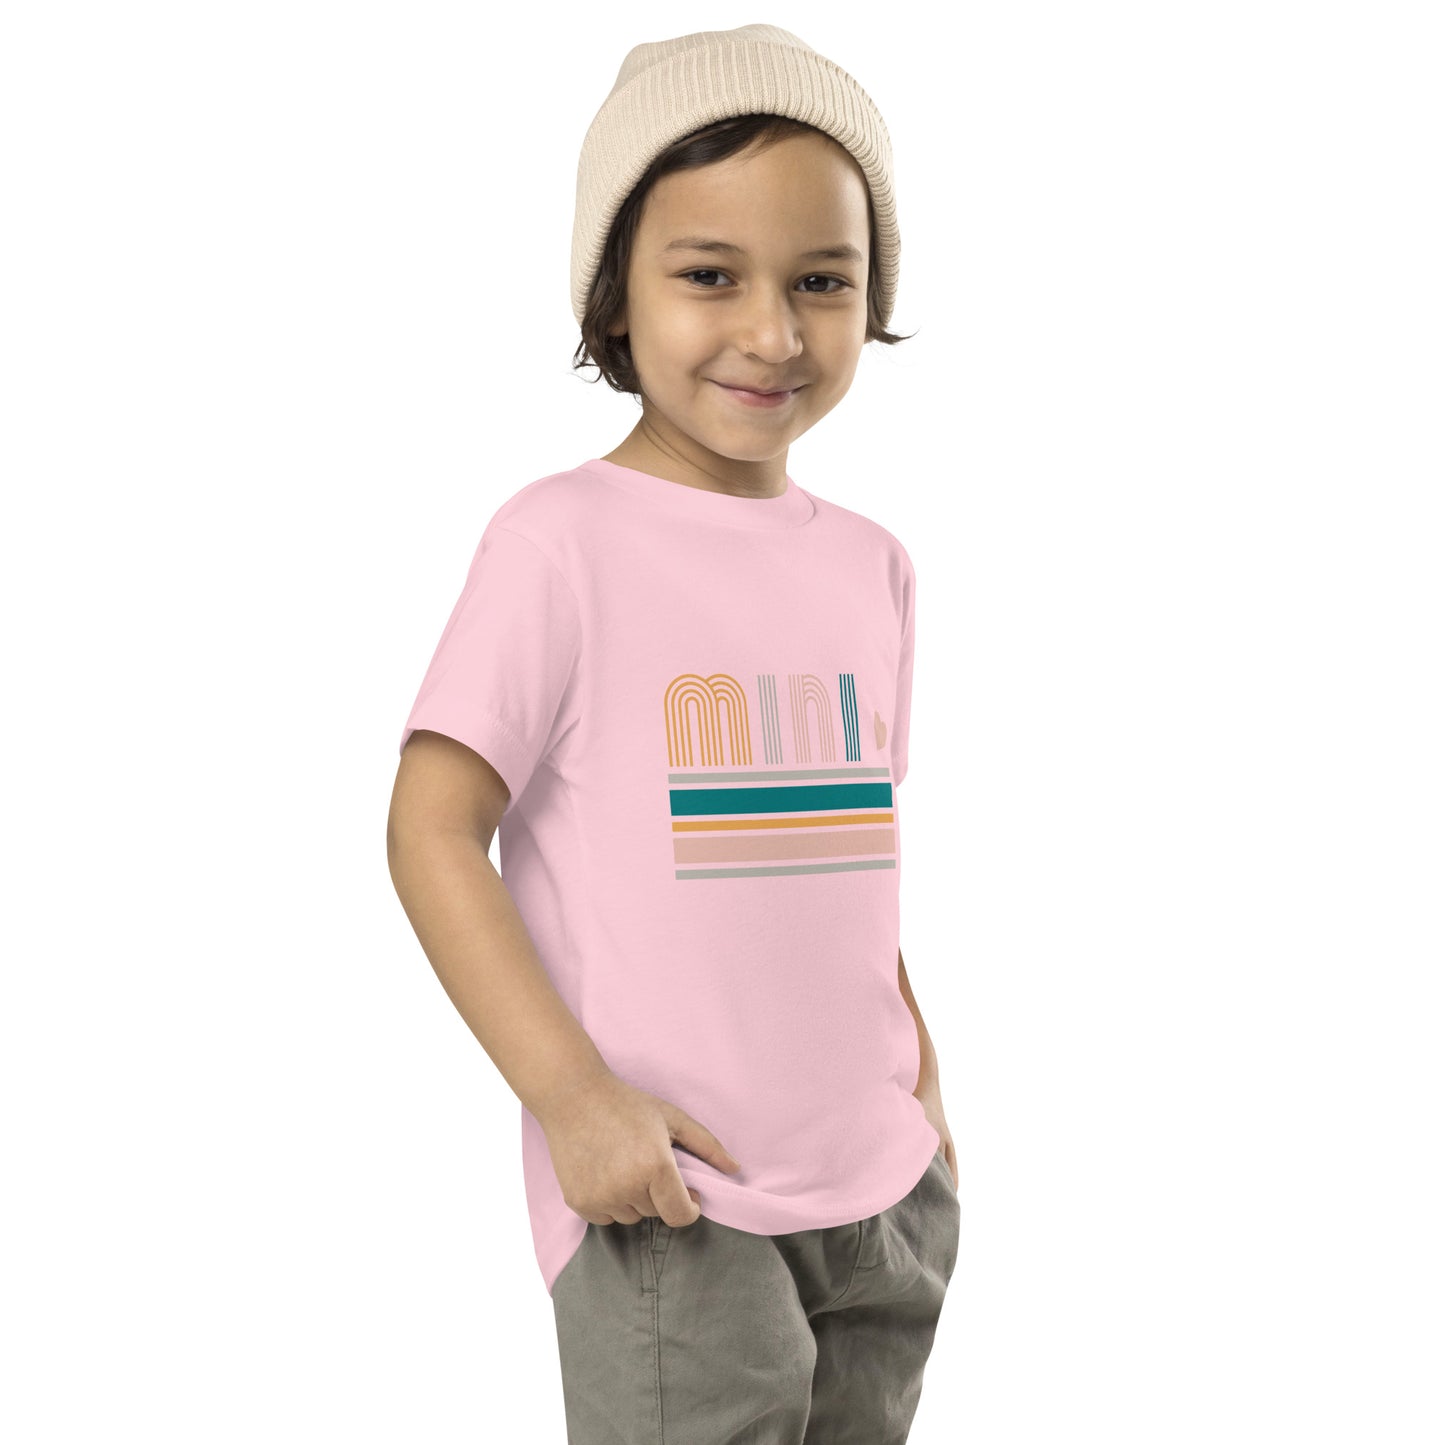 Mini Toddler Shirt